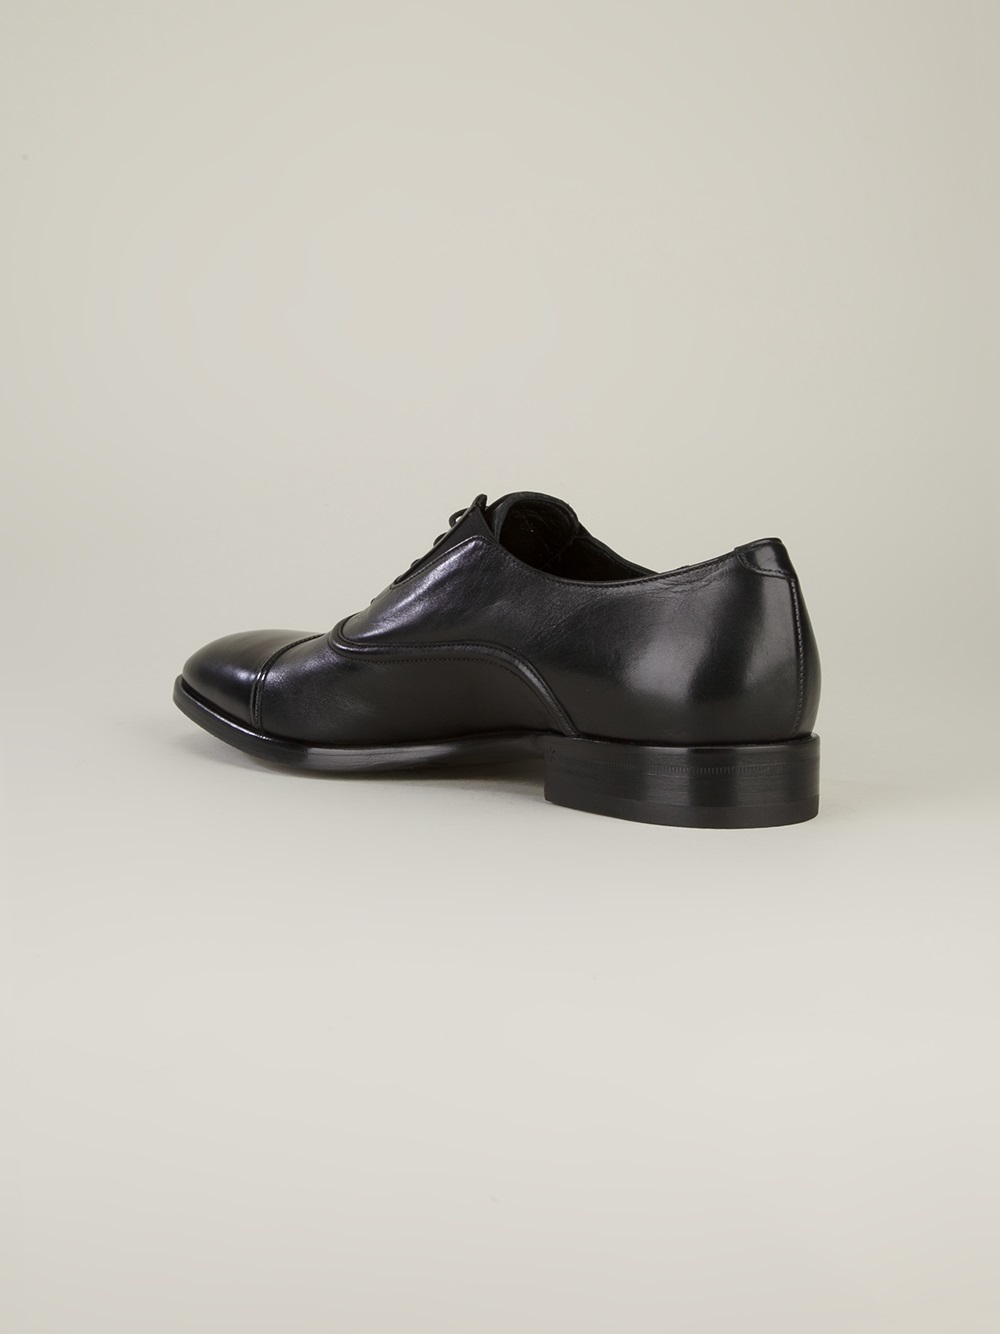 Lyst - Roberto Cavalli Oxford Shoe in Black for Men